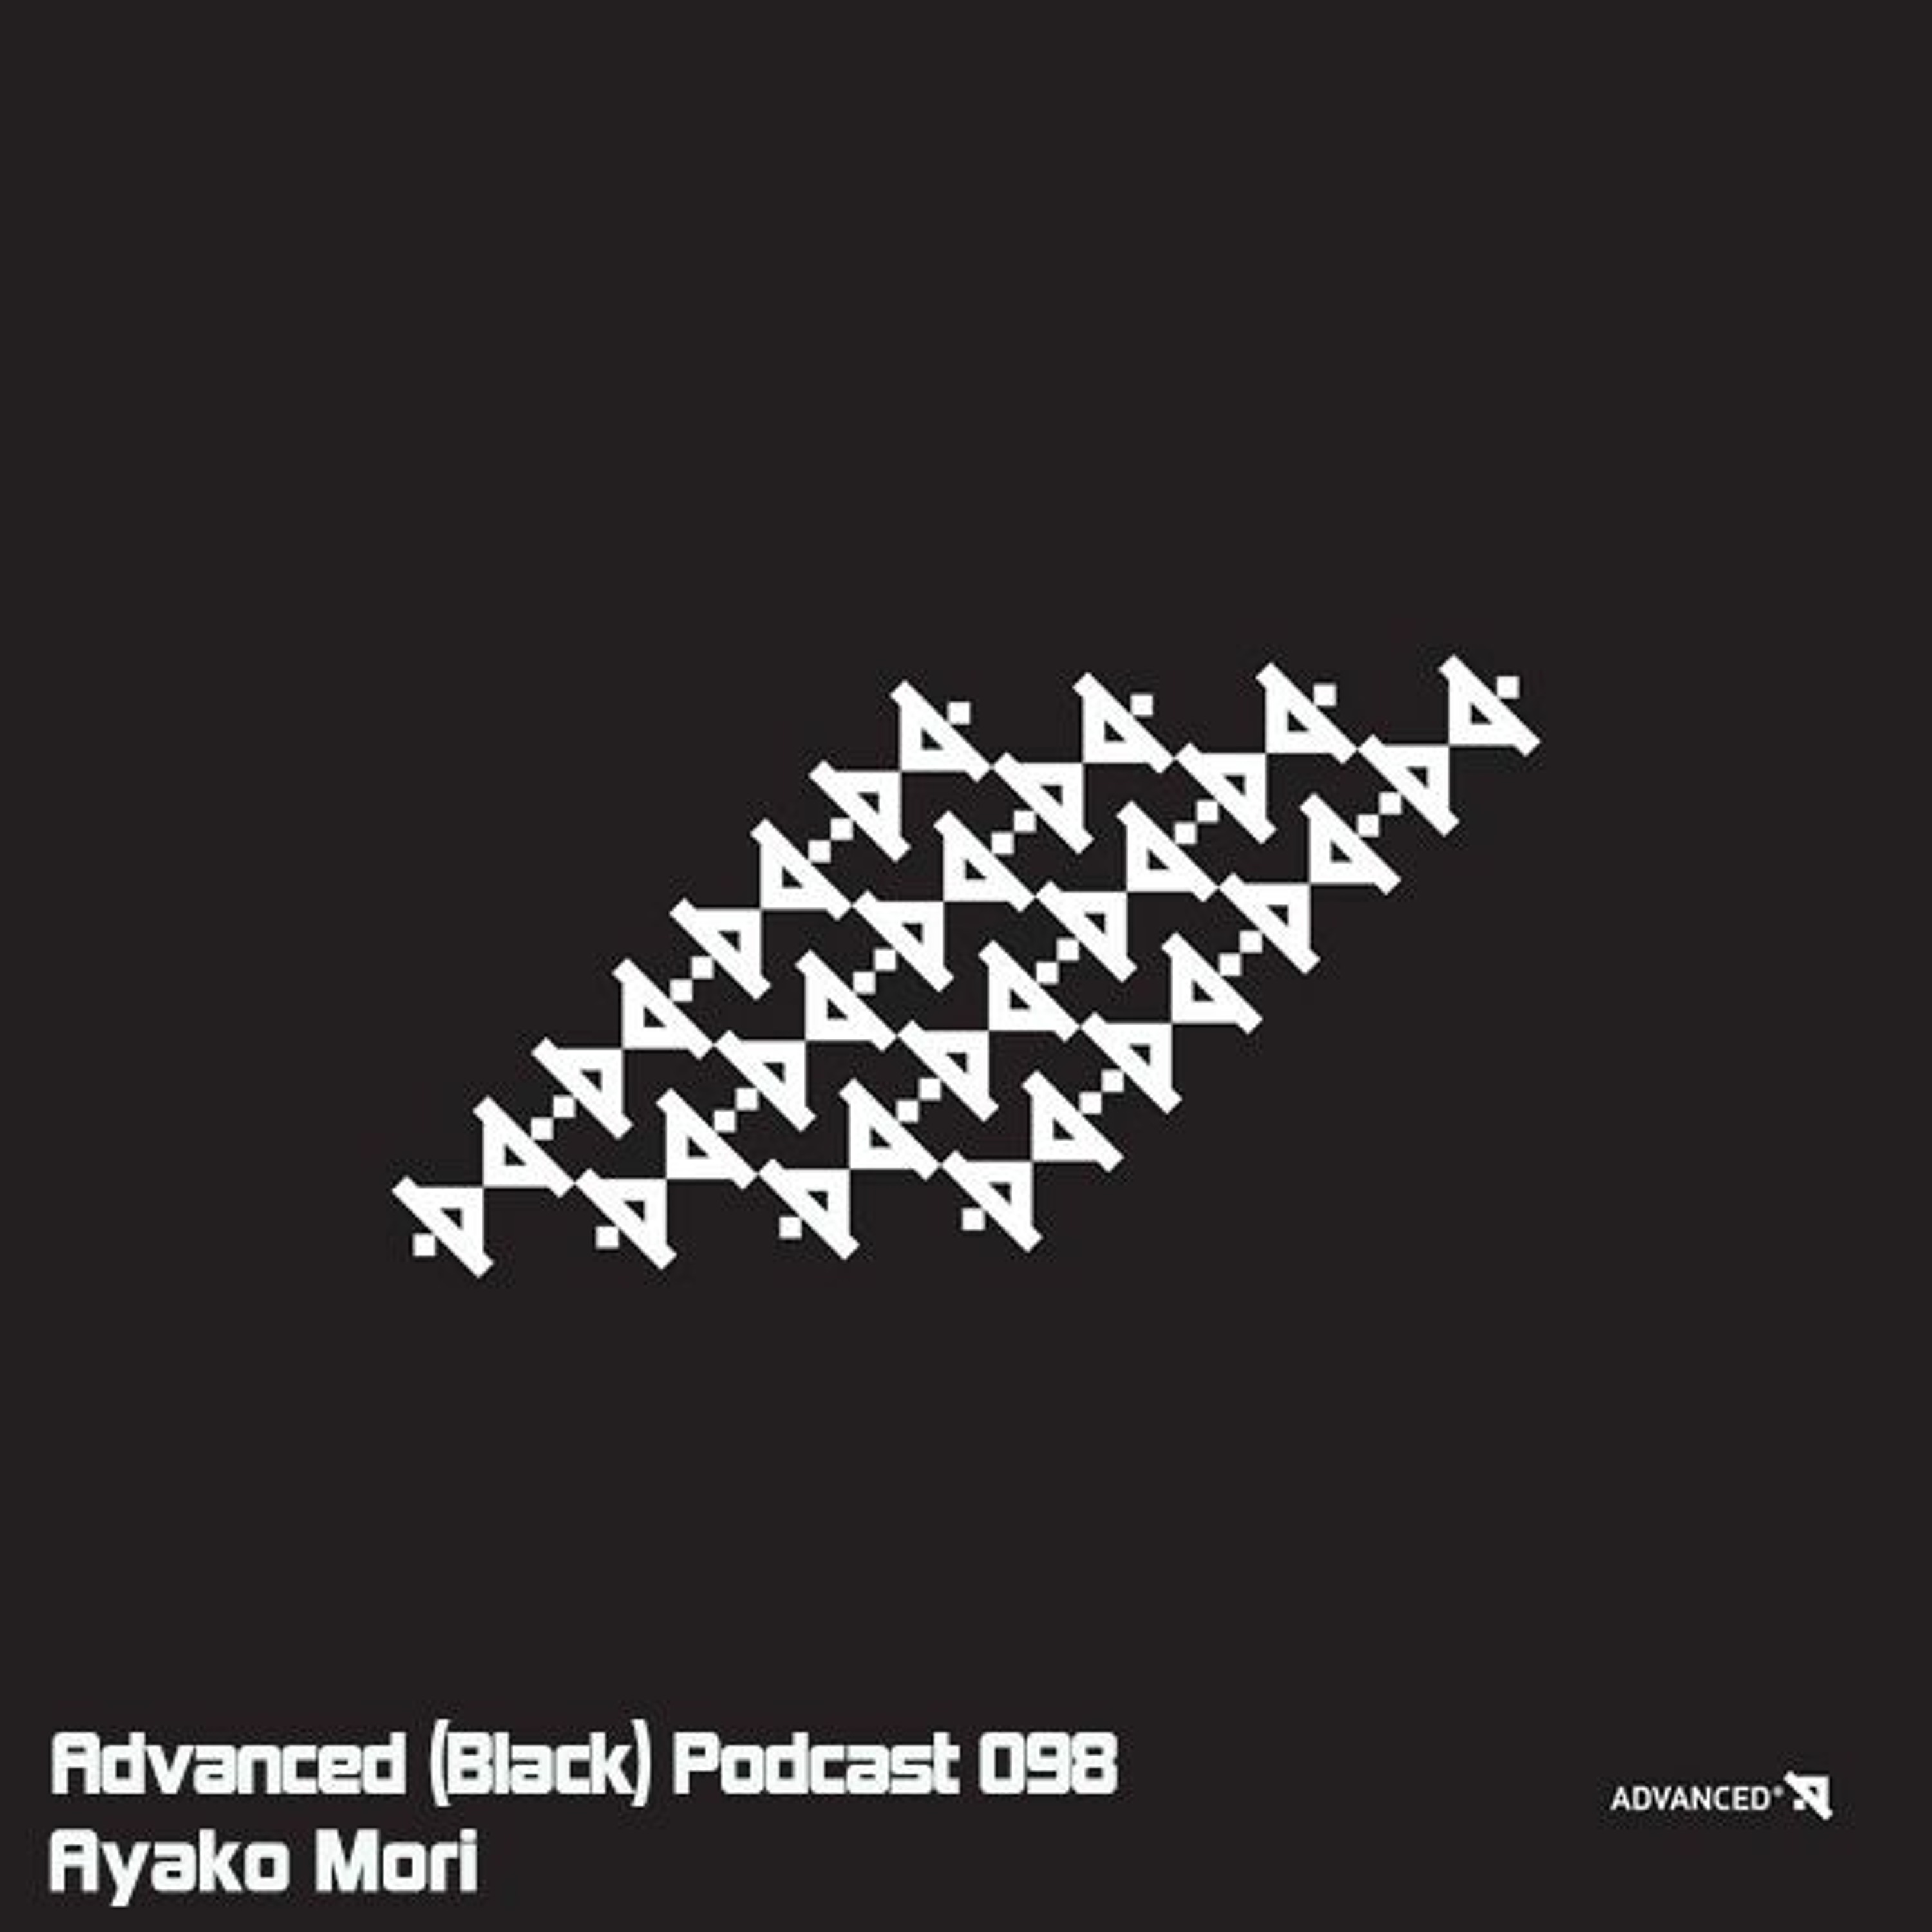 Advanced (Black) Podcast 098 with Ayako Mori